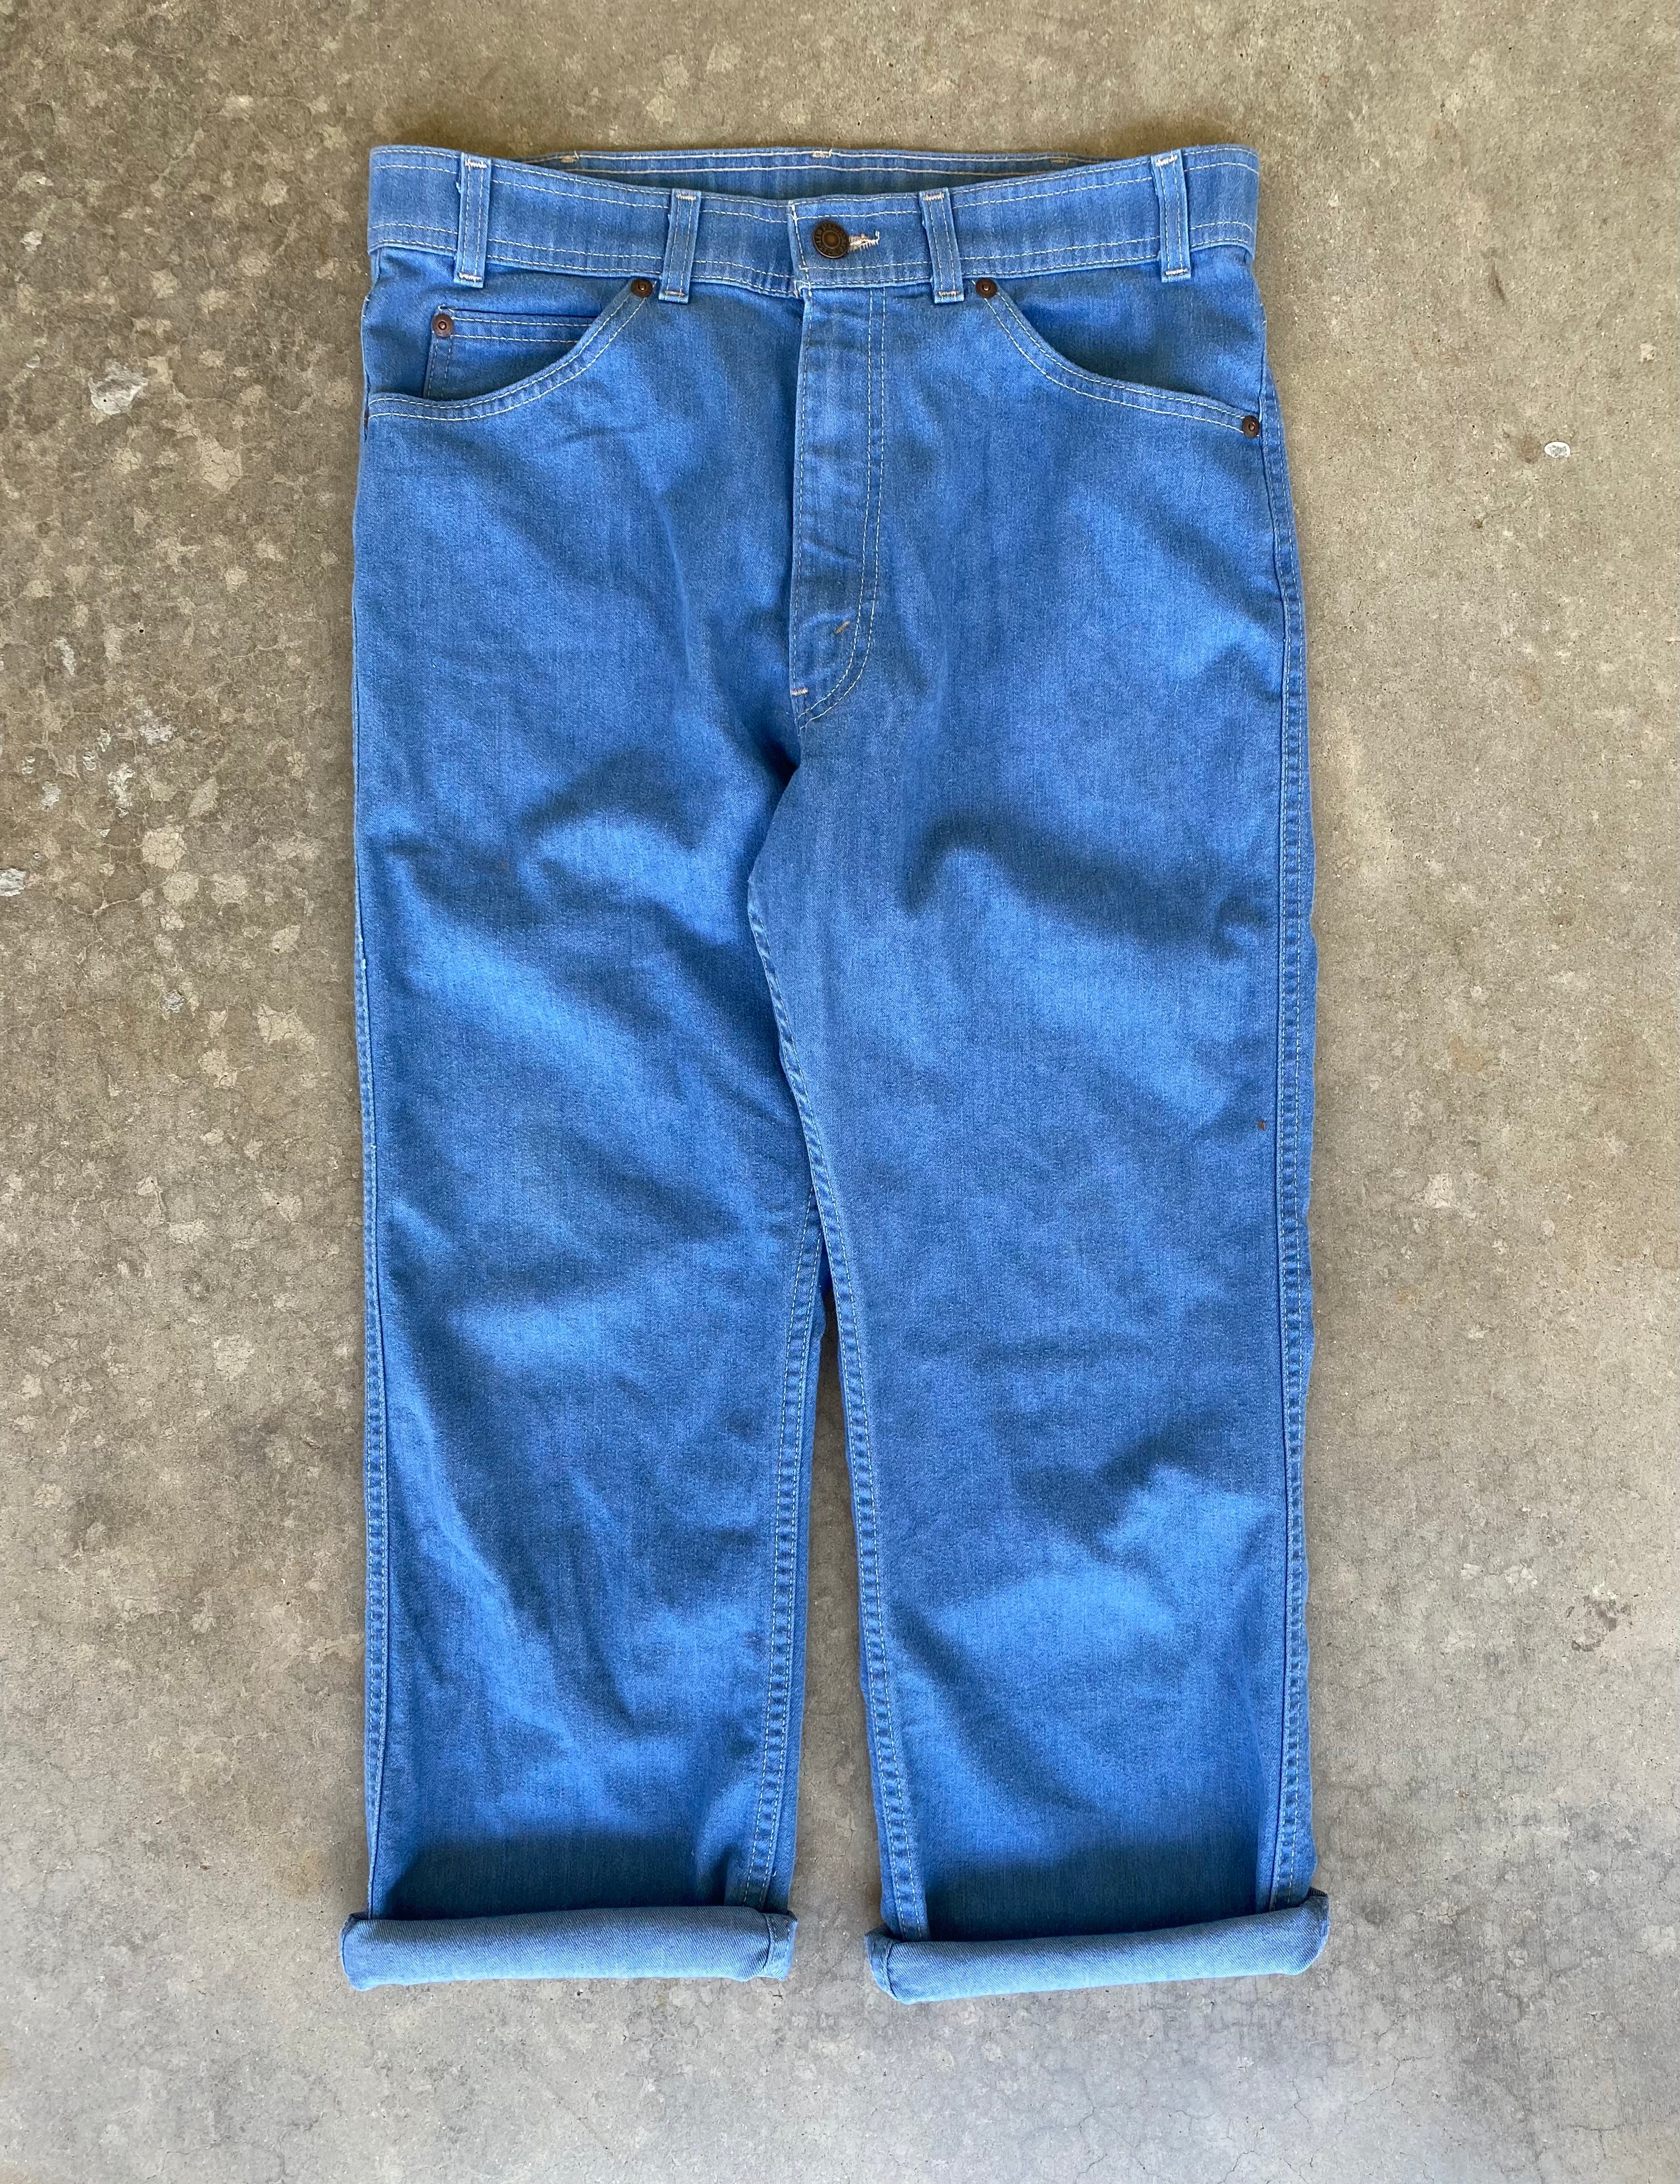 Vintage Levi's Skosh Jeans (32"x25")